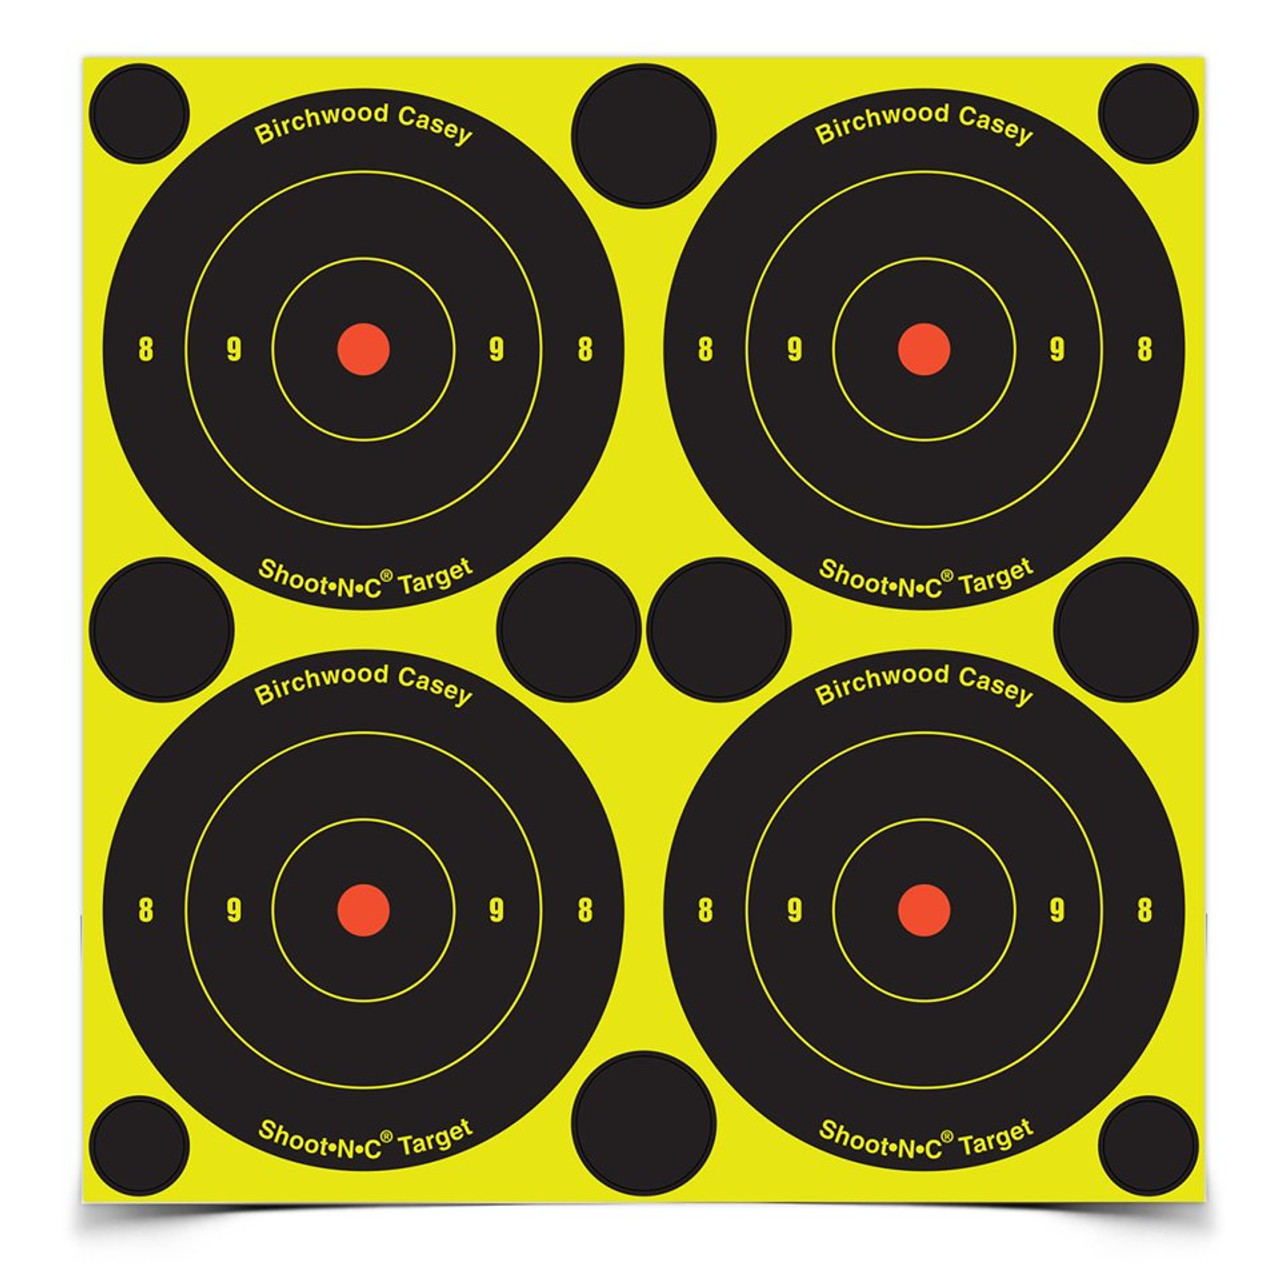 Birchwood Casey Shoot-N-C 3 inch Round 240 Targets